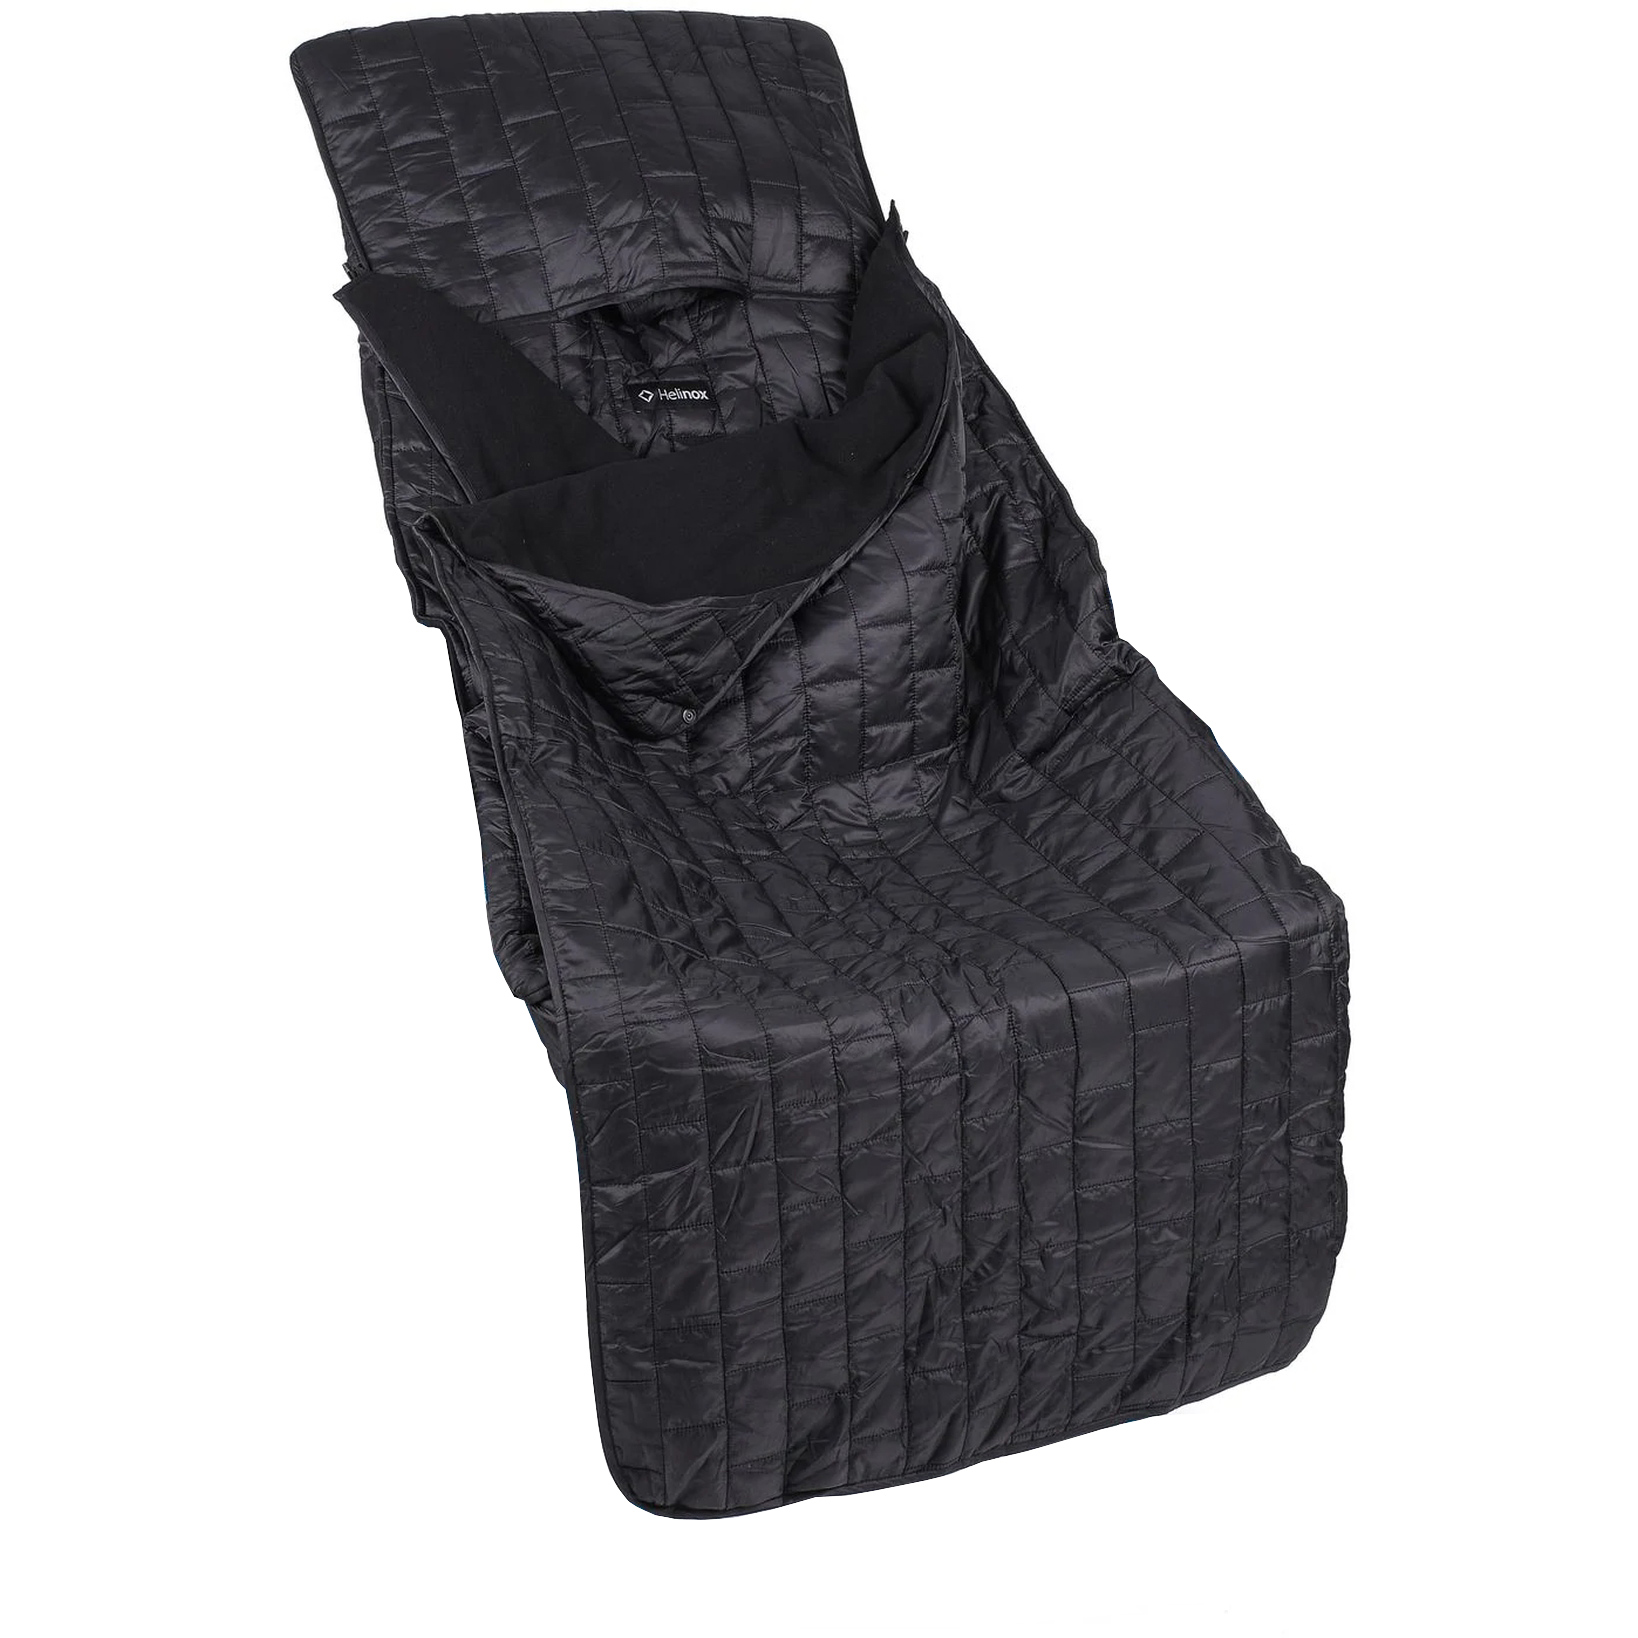 Picture of Helinox Toasty Blanket for Savanna/Playa Chair - black